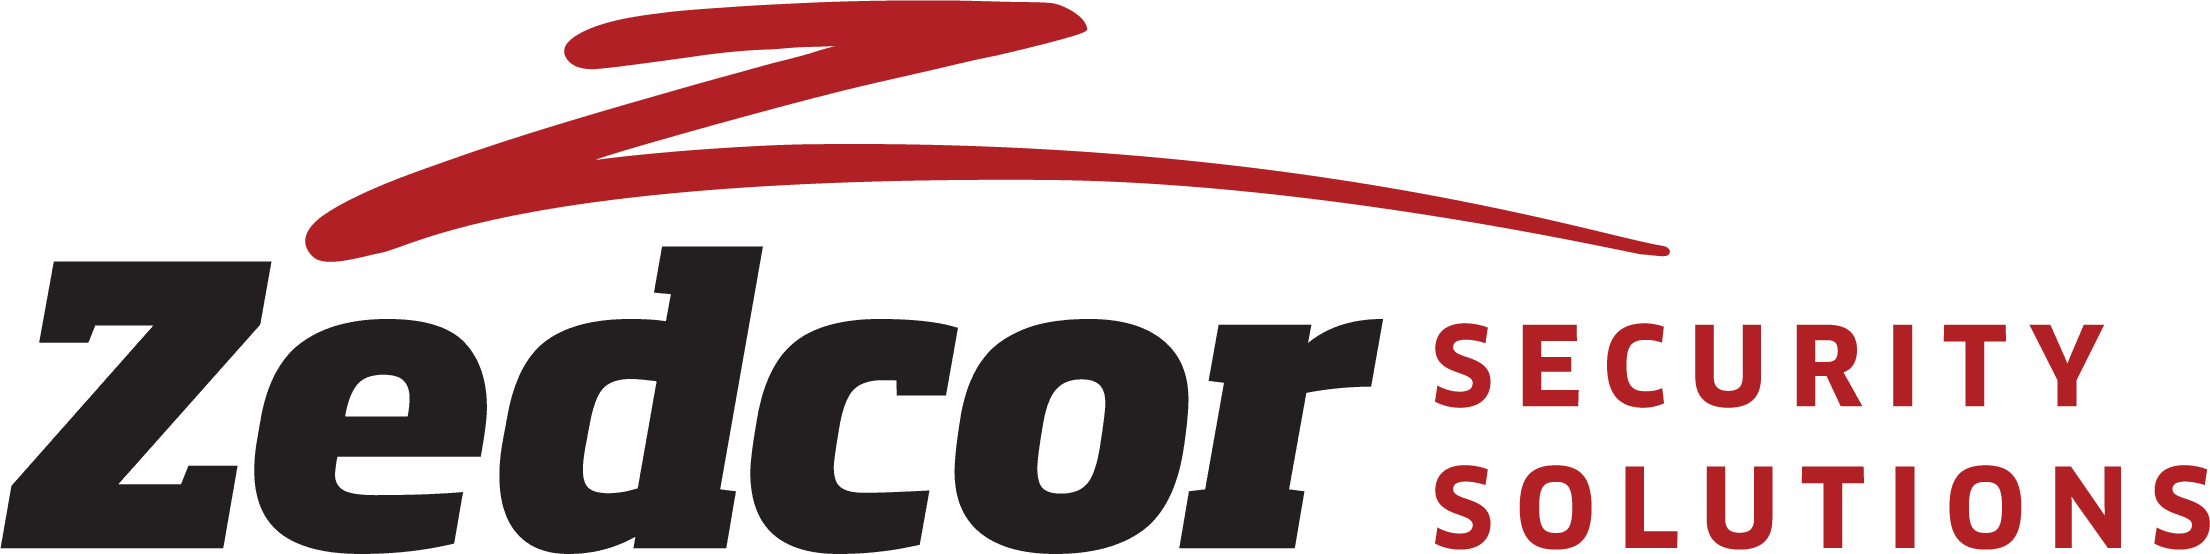 Zedcor Security Solutions logo